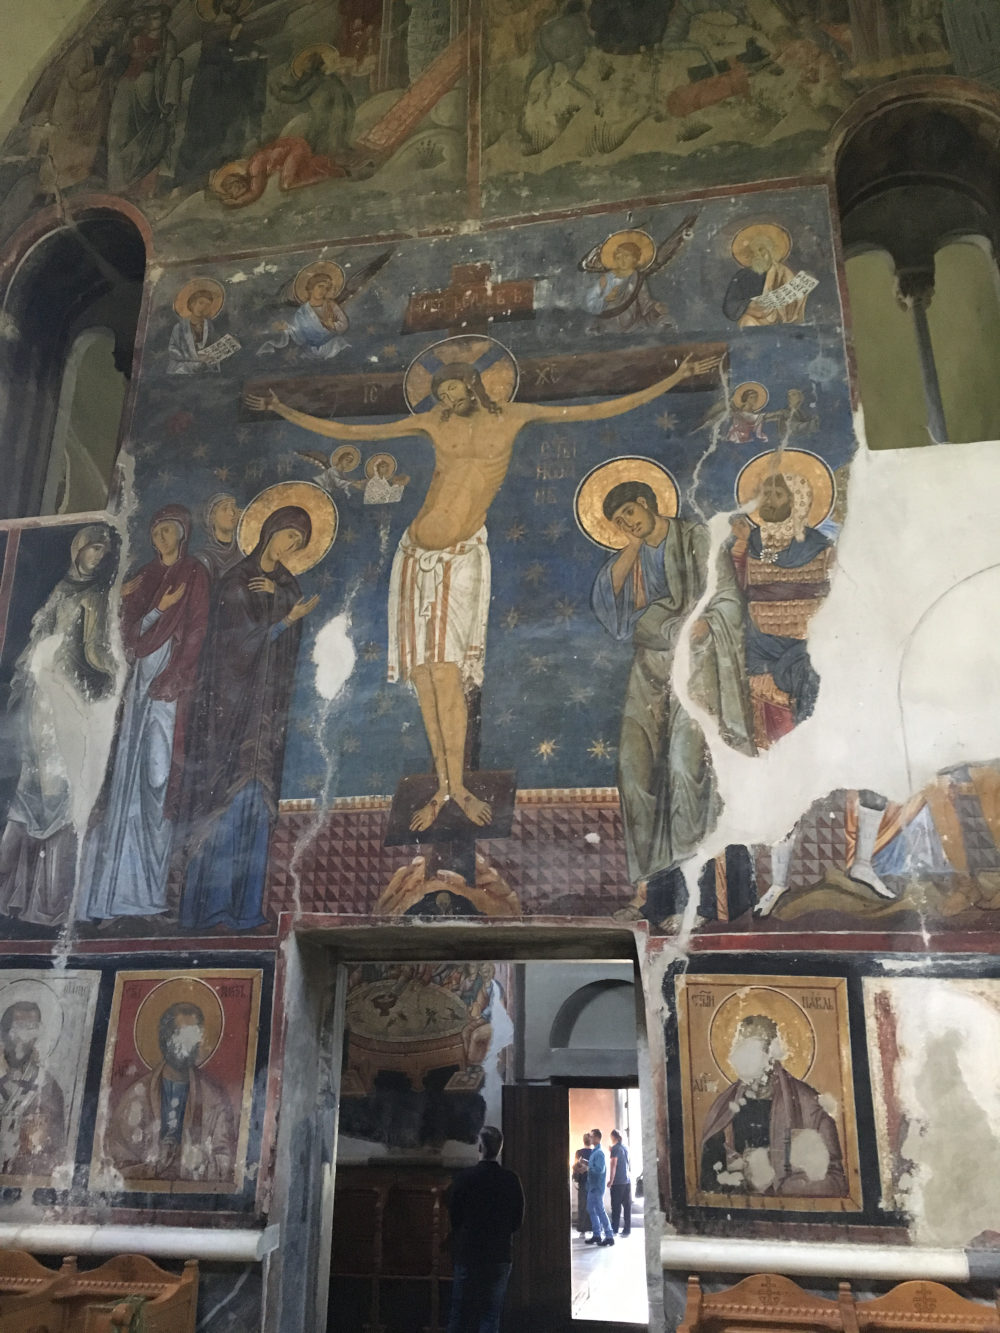 Studenica monastery "Crucifixion"